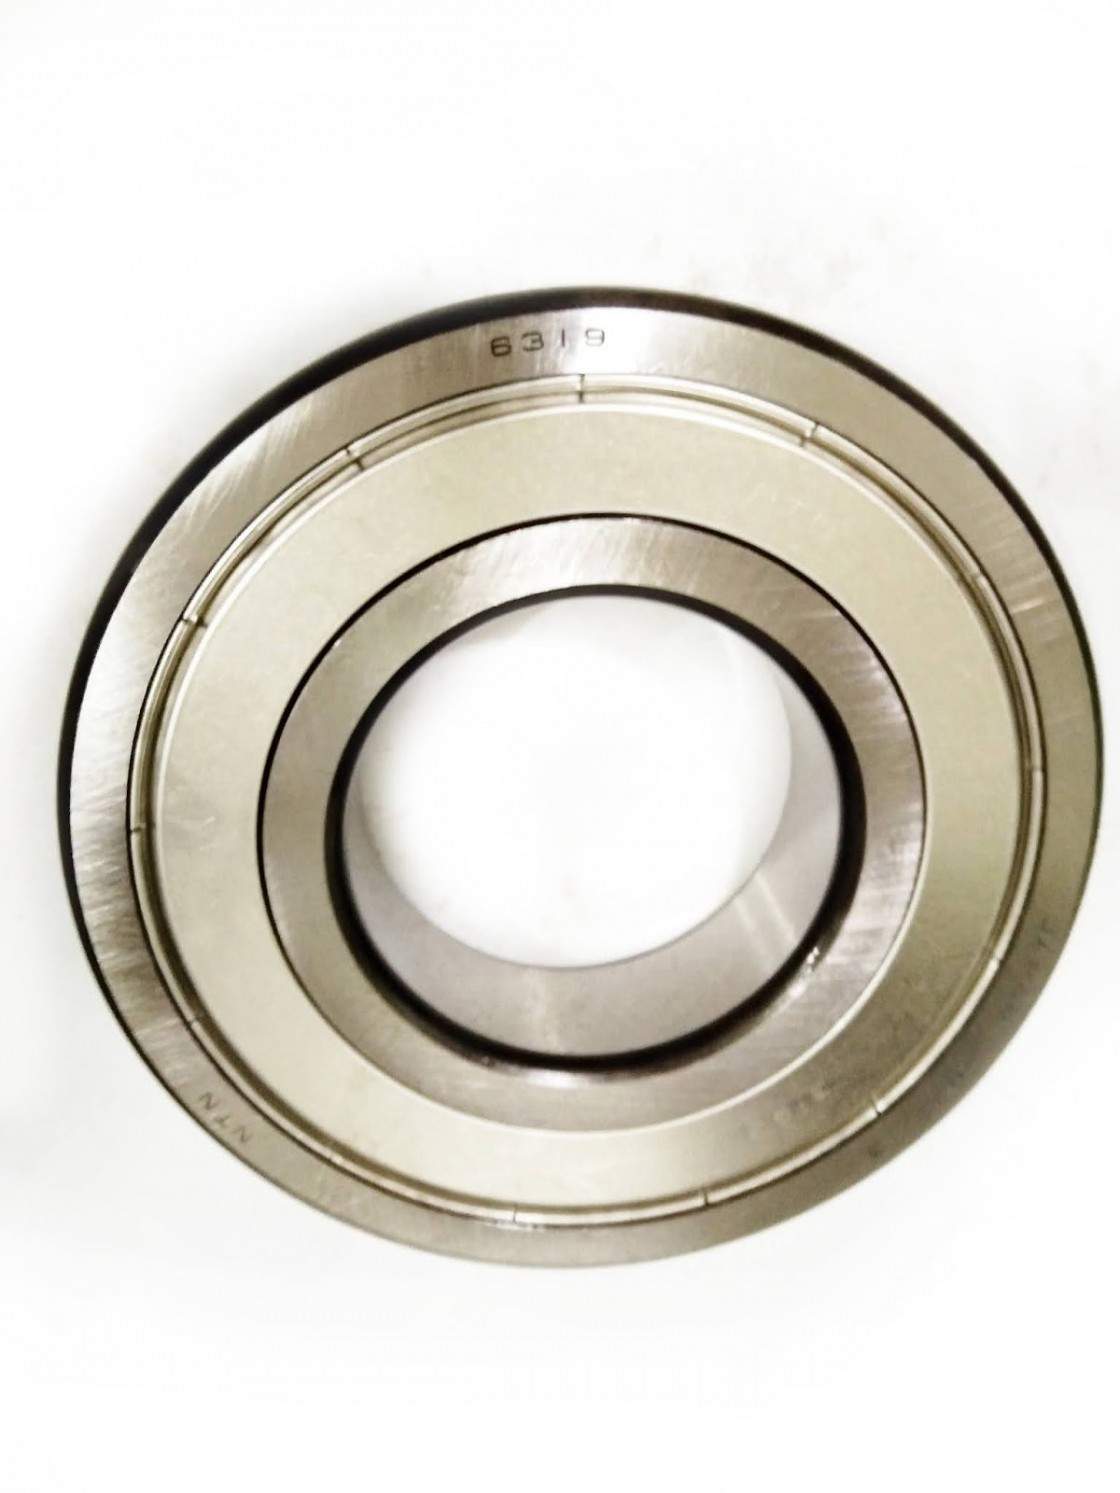 Koyo NSK NTN Japan deep groove ball bearing 6207-2rs 6207 2RS ZZ C3 bearing price list